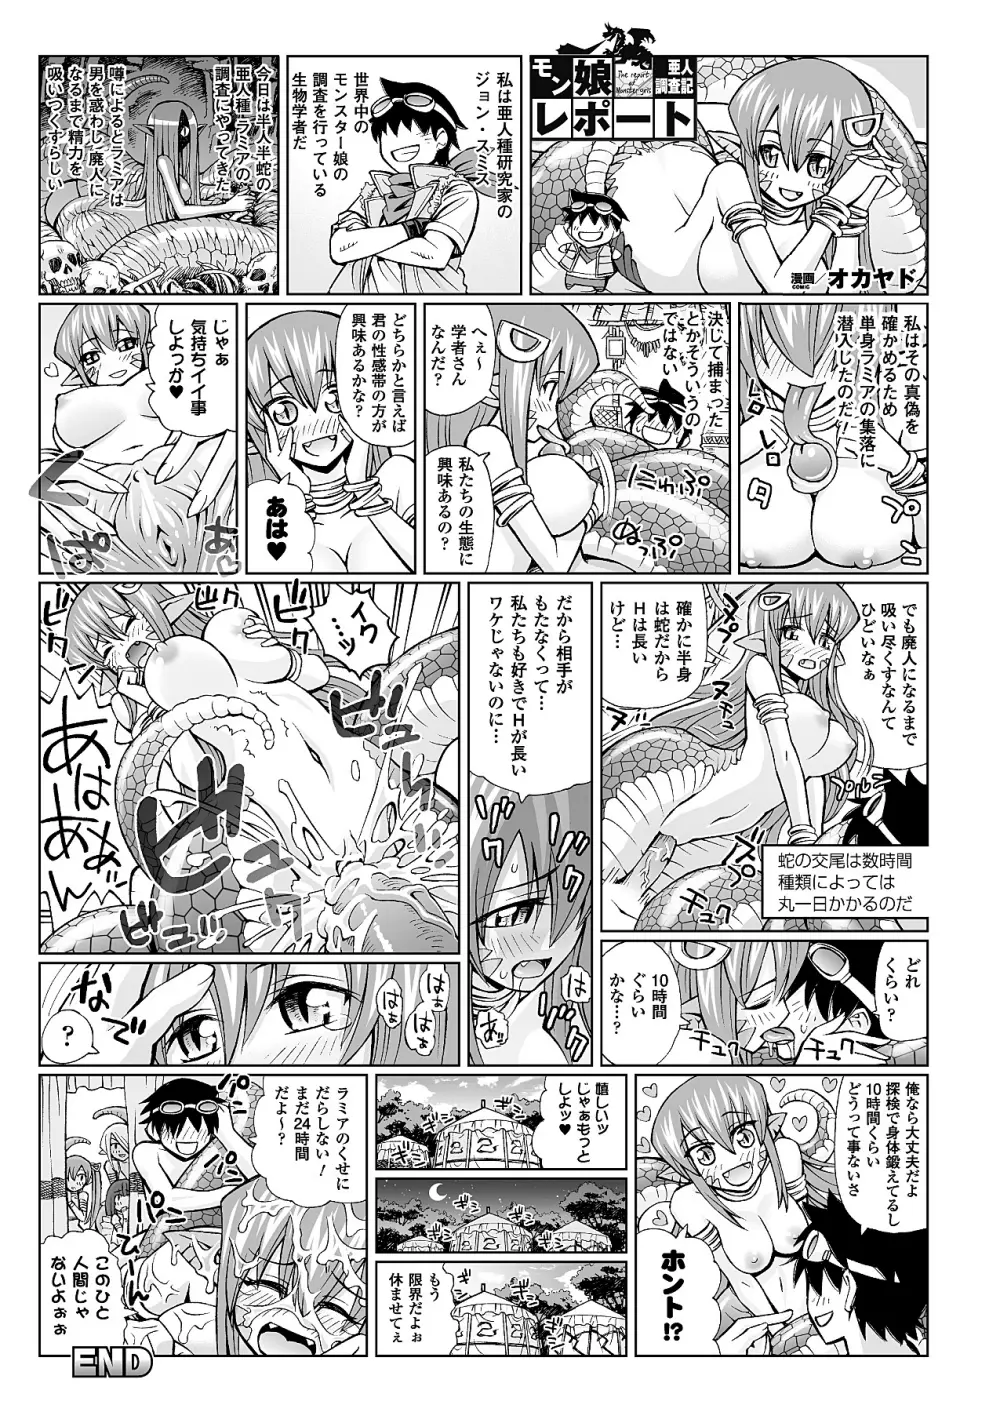 The Report of Monster Girls 01-05 1ページ